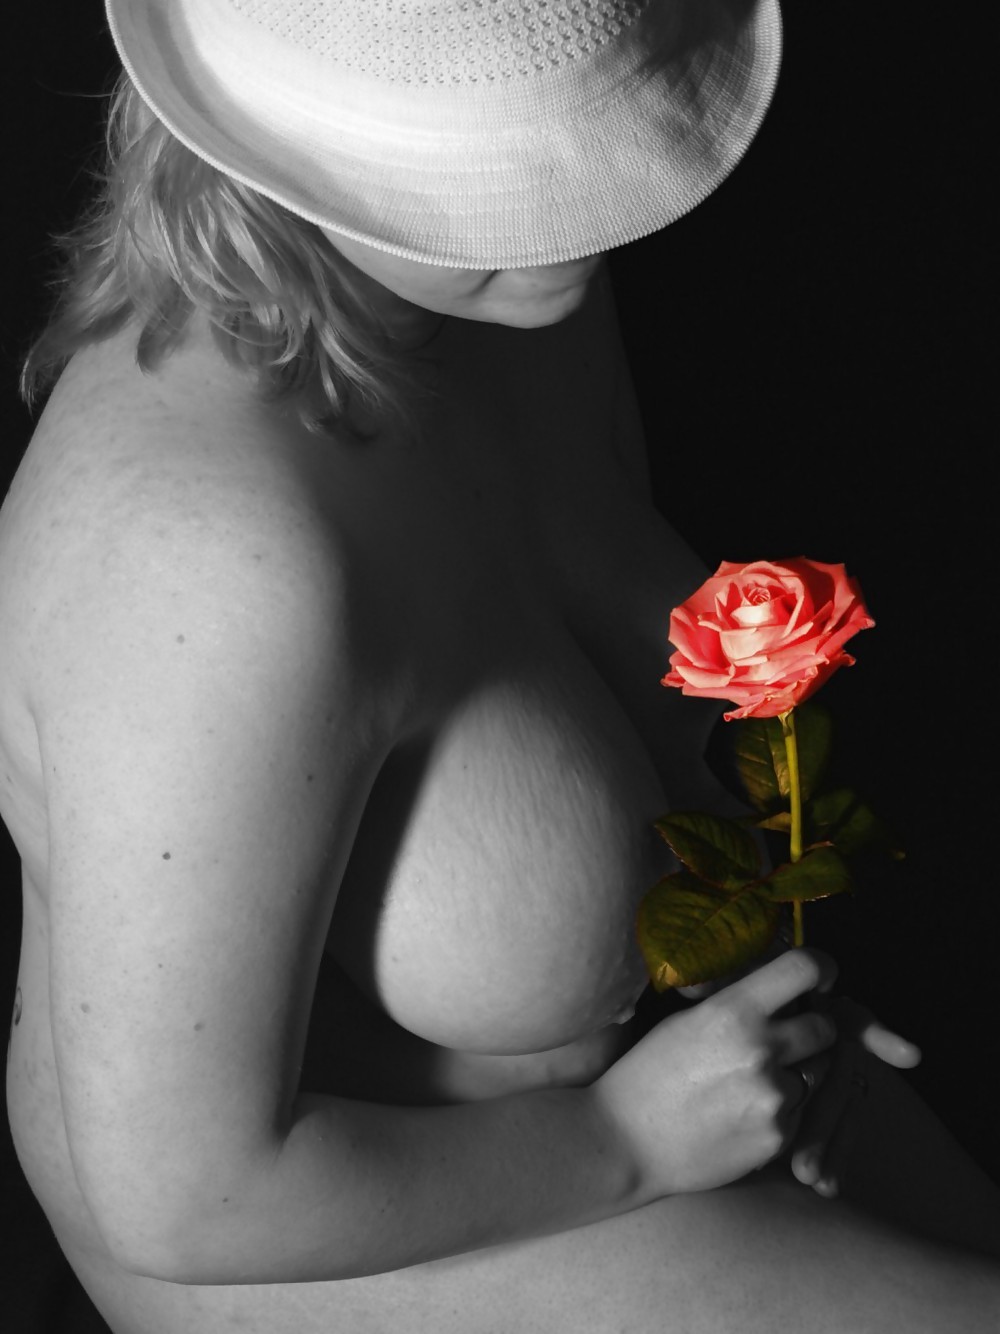 Erotic Art of Roses - Session 2 #4232437